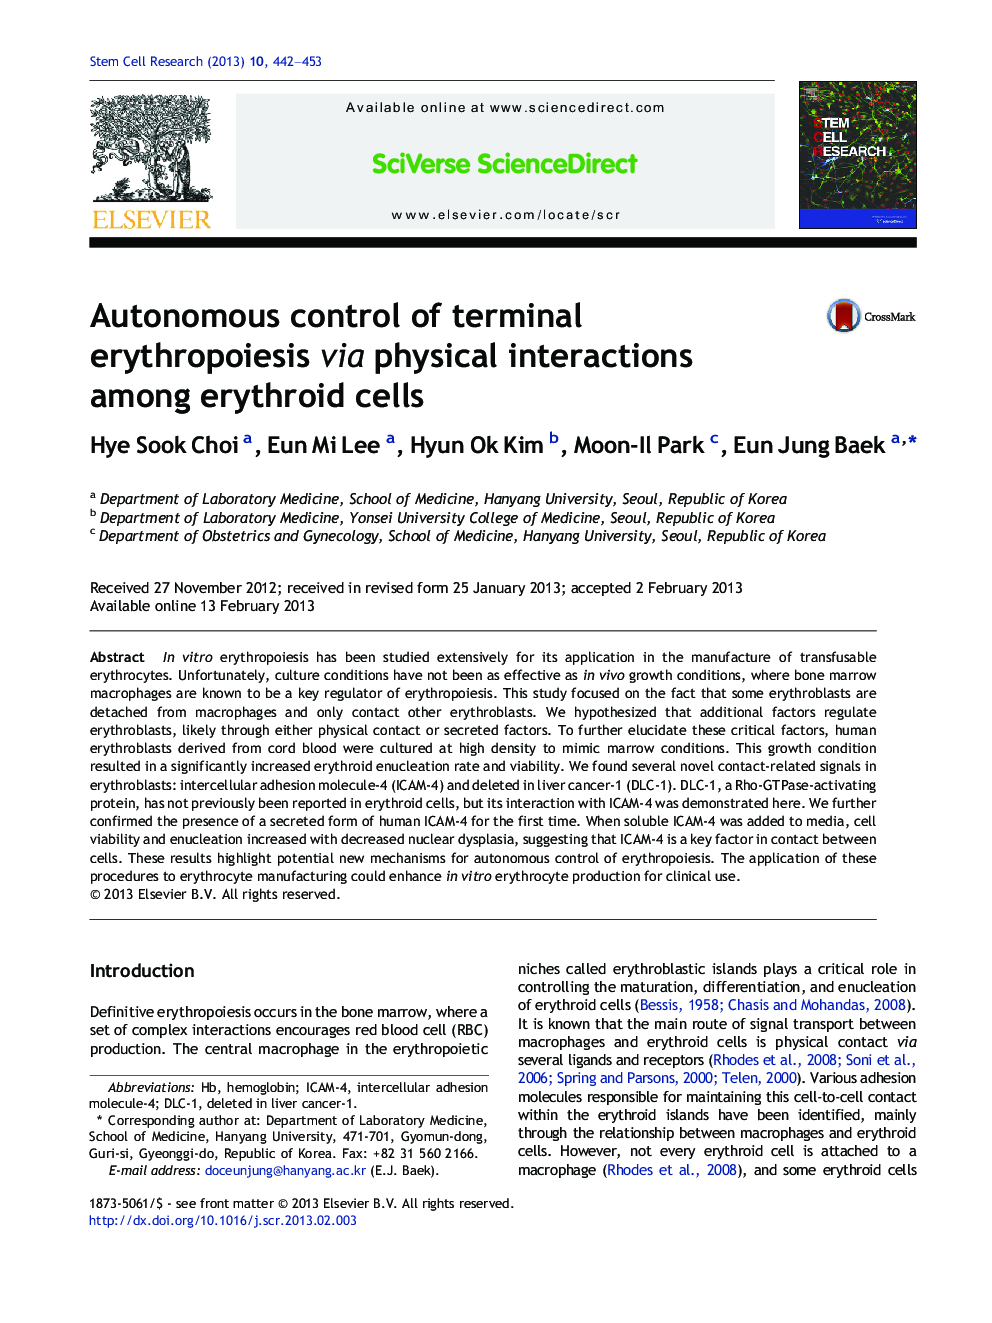 Autonomous control of terminal erythropoiesis via physical interactions among erythroid cells